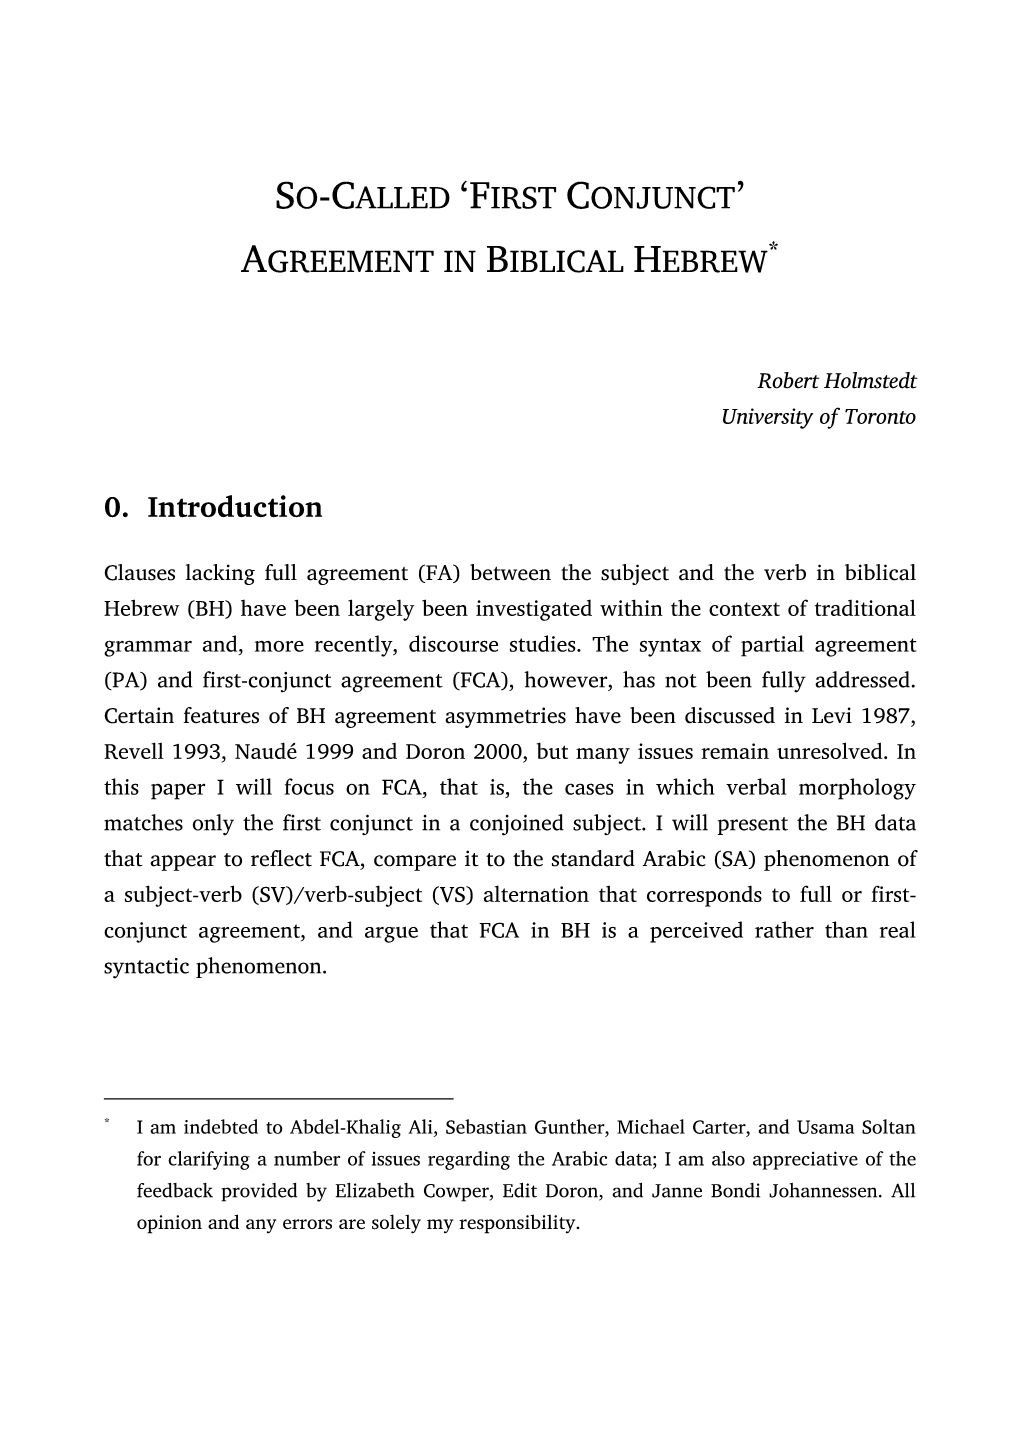 Agreement in Biblical Hebrew*